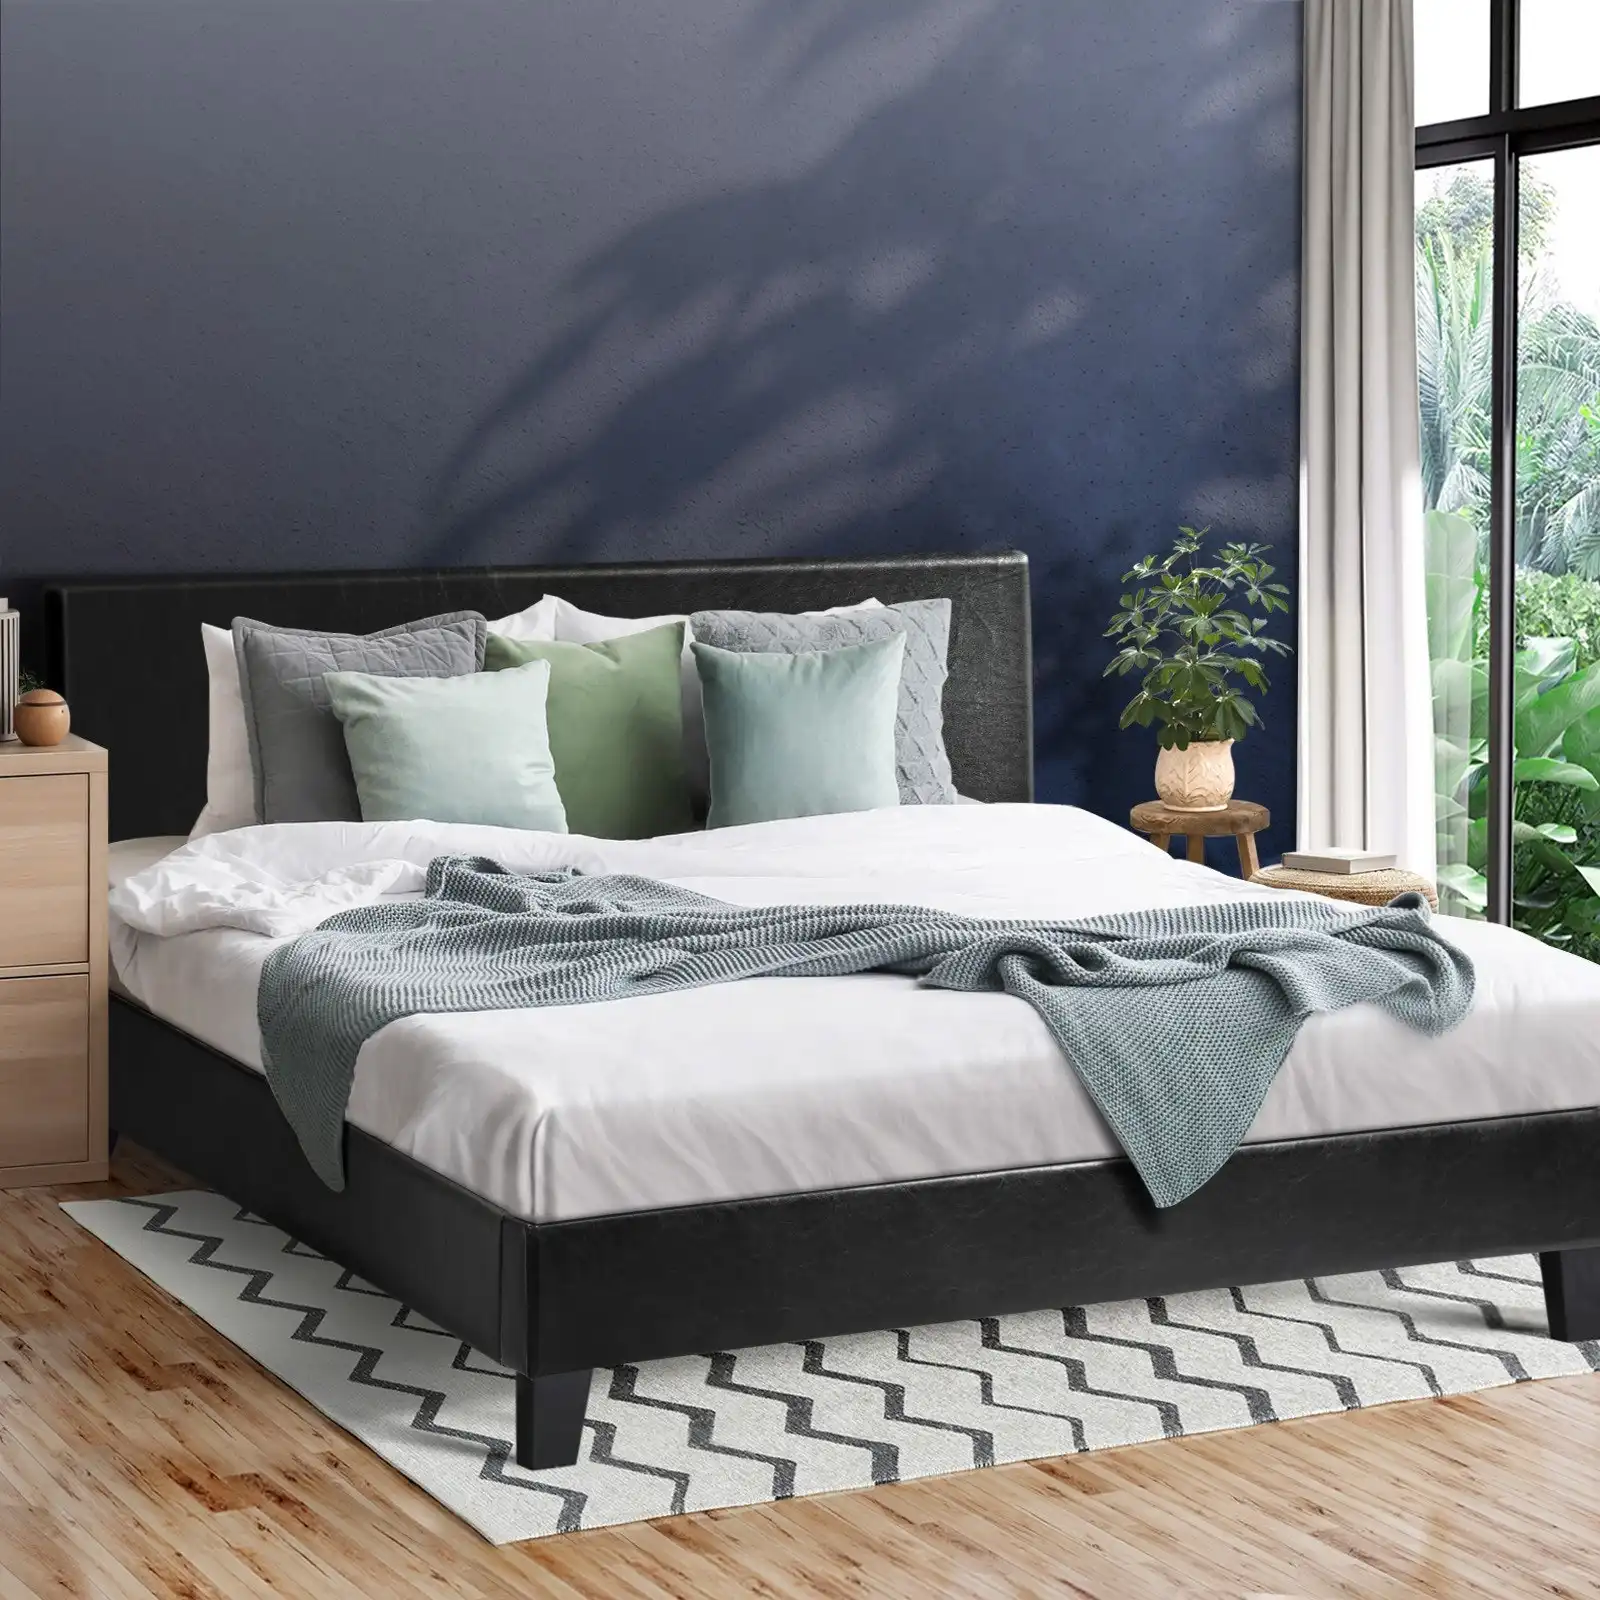 Oikiture Bed Frame Double Size Base Mattress Platform Leather Wooden Slats Black